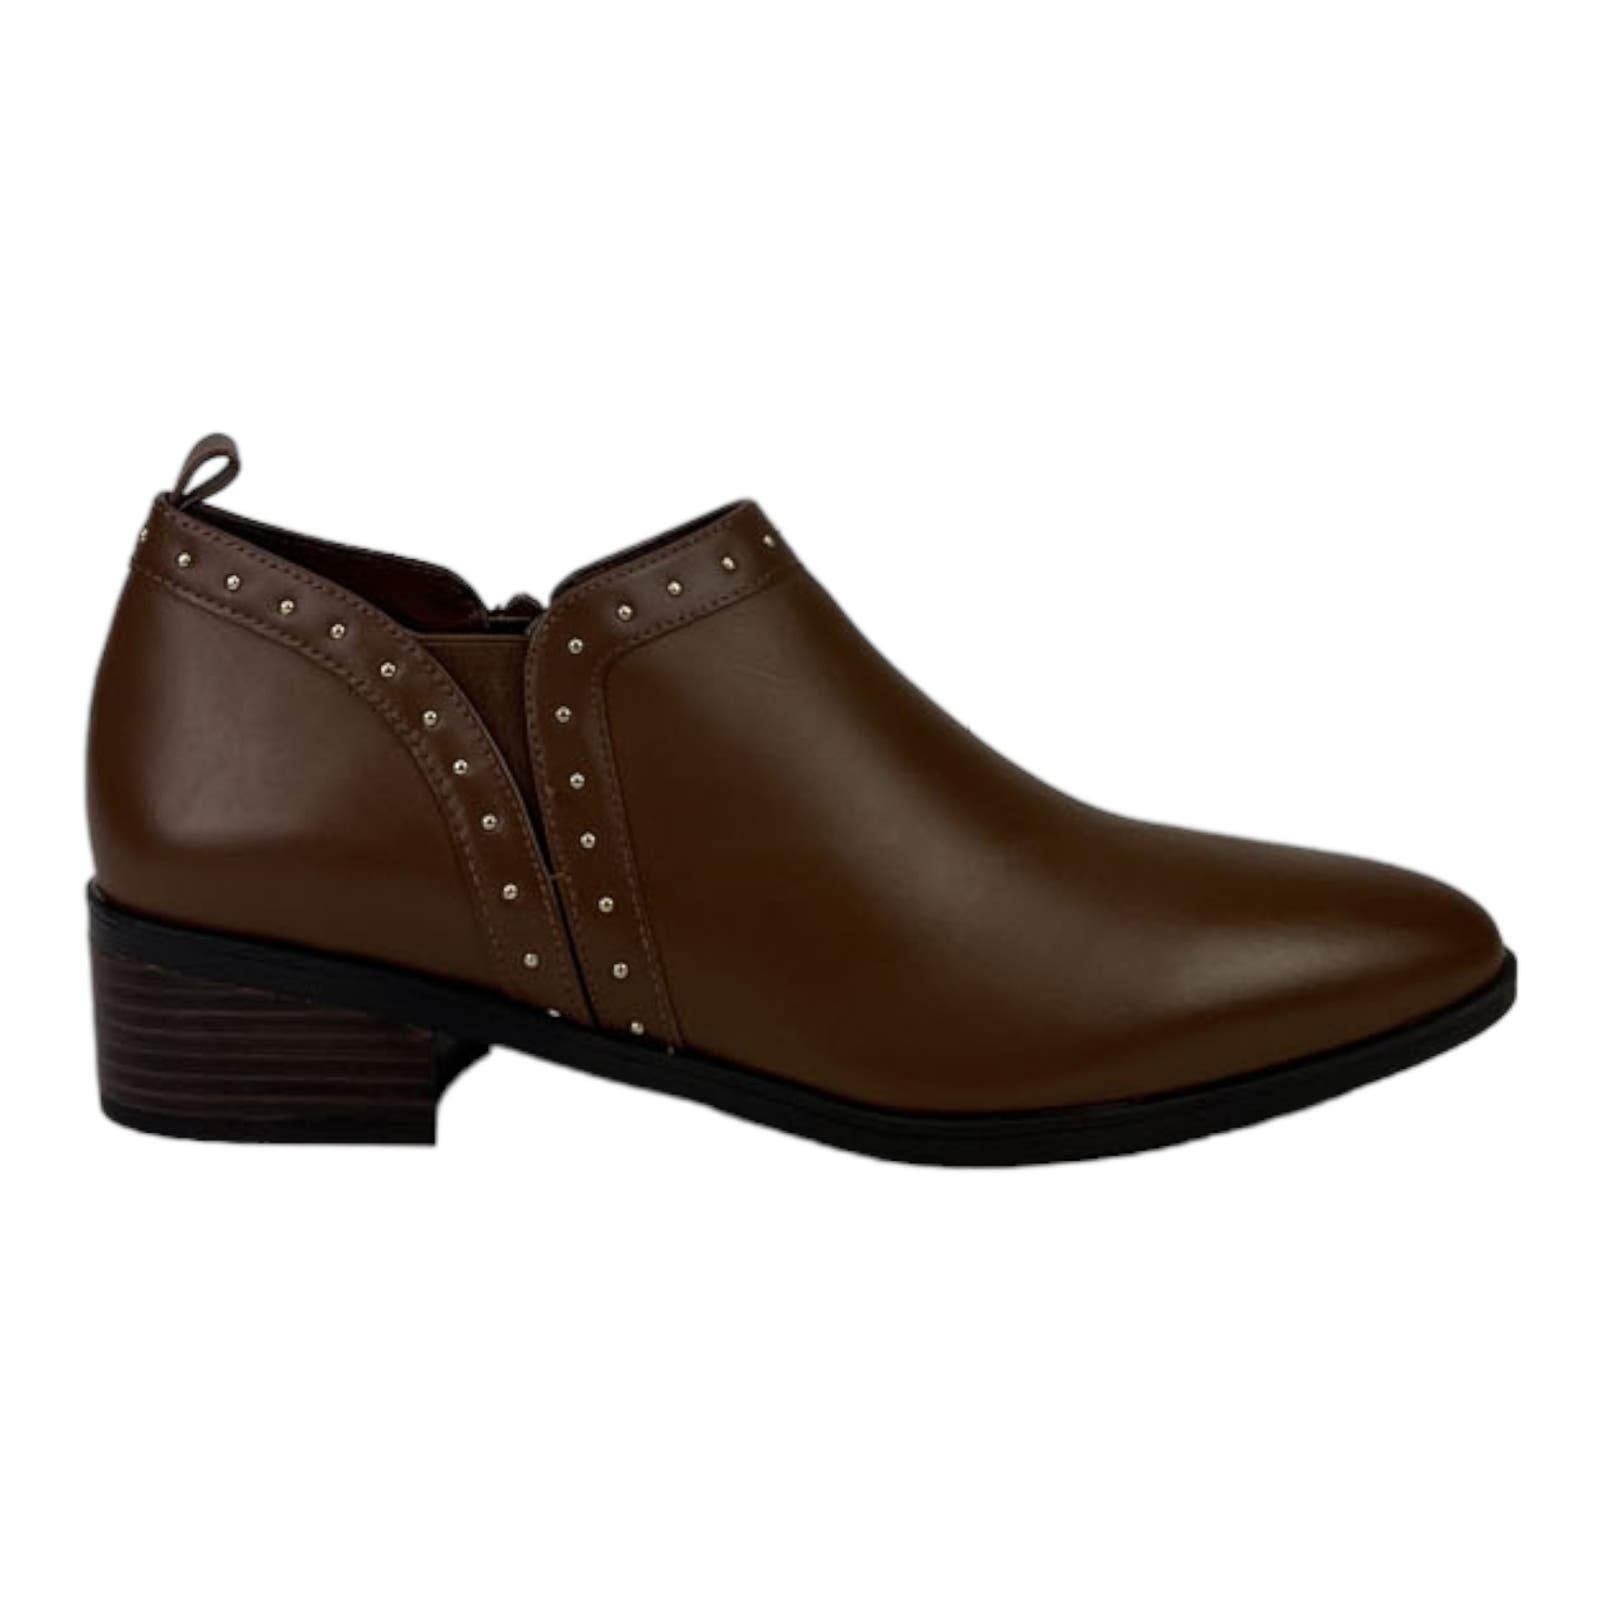 Bella Vita Women US 6.5 Dark Tan Brown Leather Ankle Boot Shoes